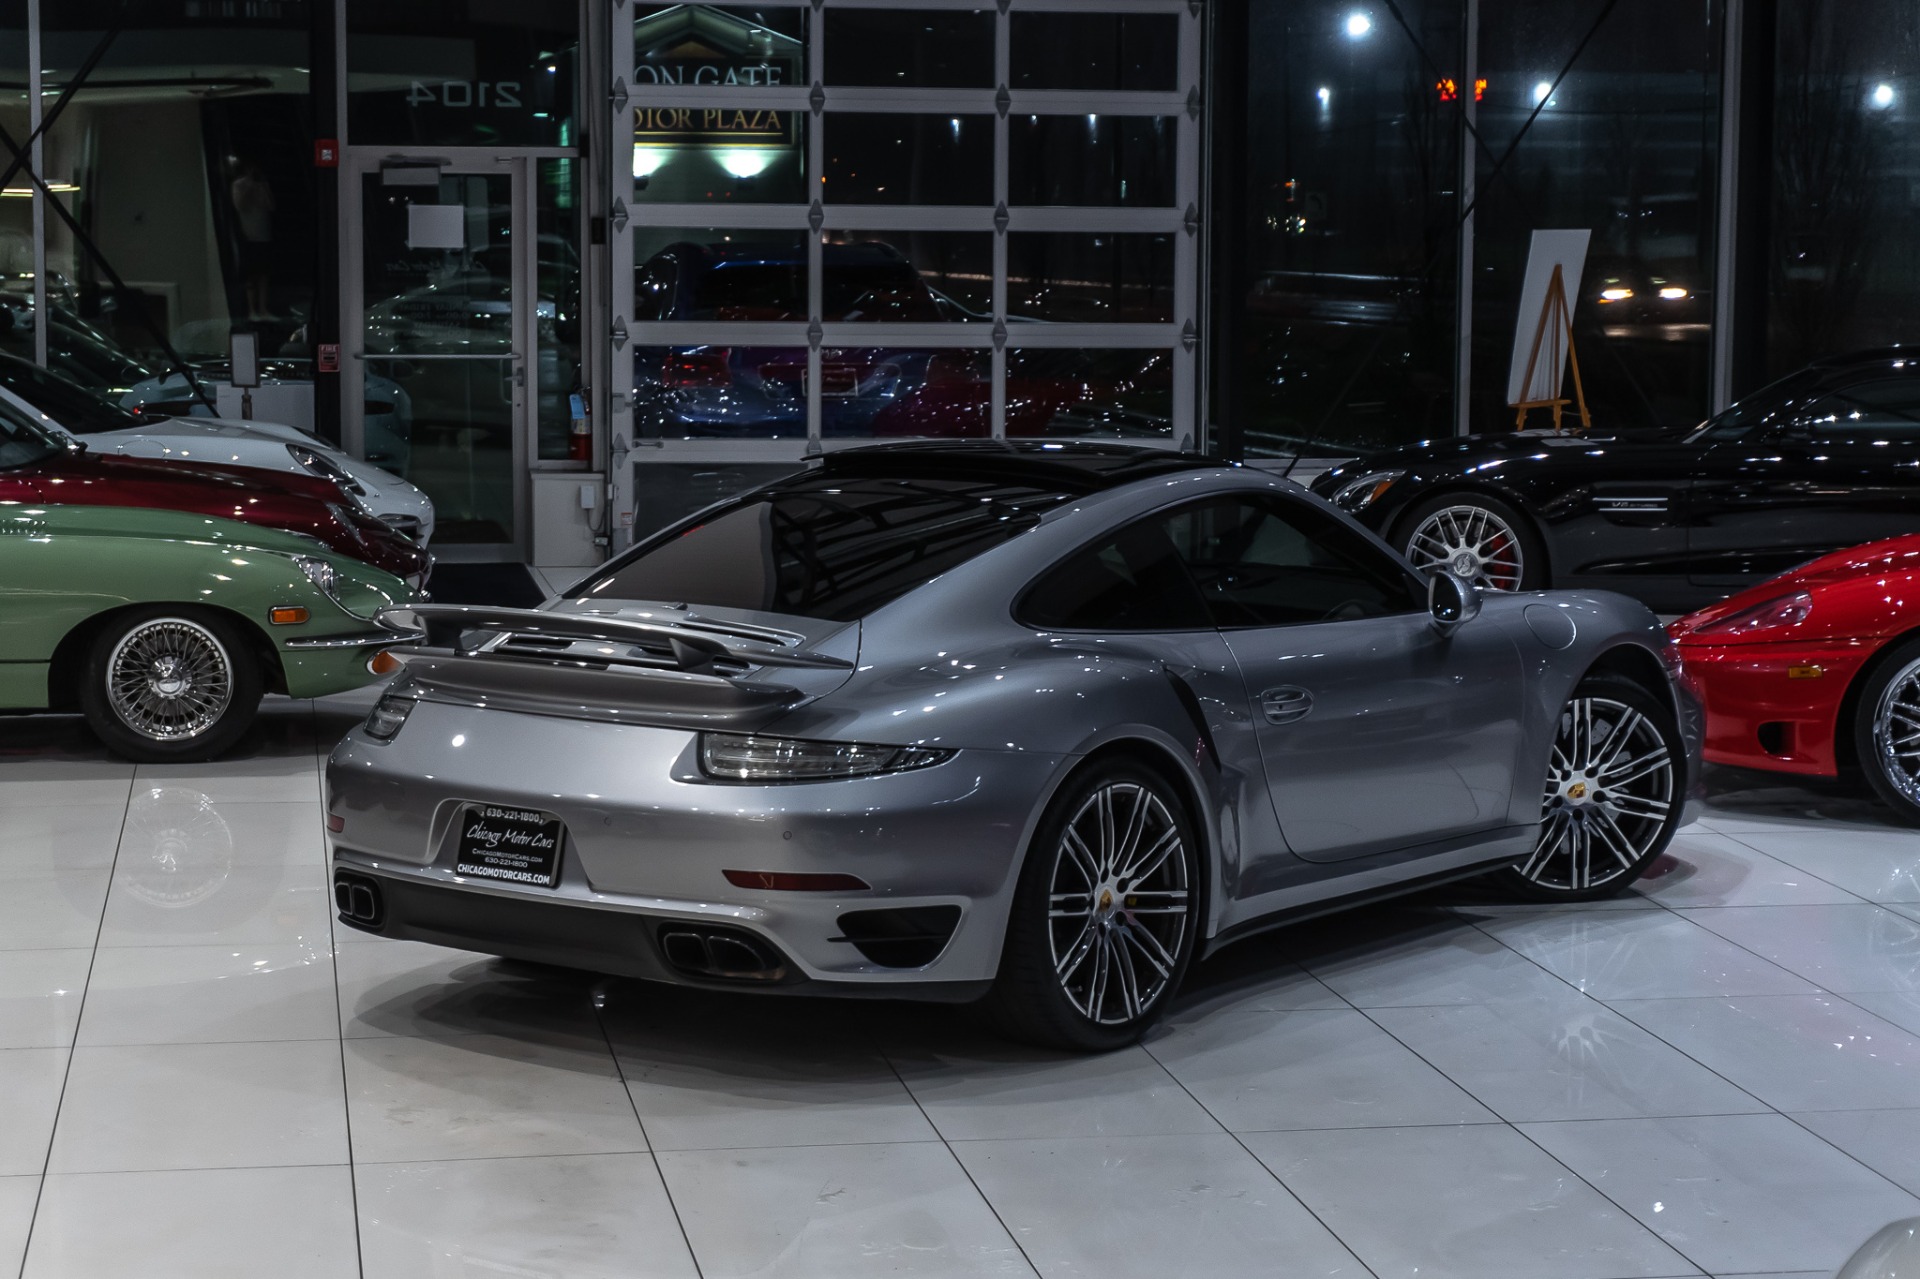 Used 2015 Porsche 911 Turbo S COUPE GT SILVER METALLIC! SUNROOF ...